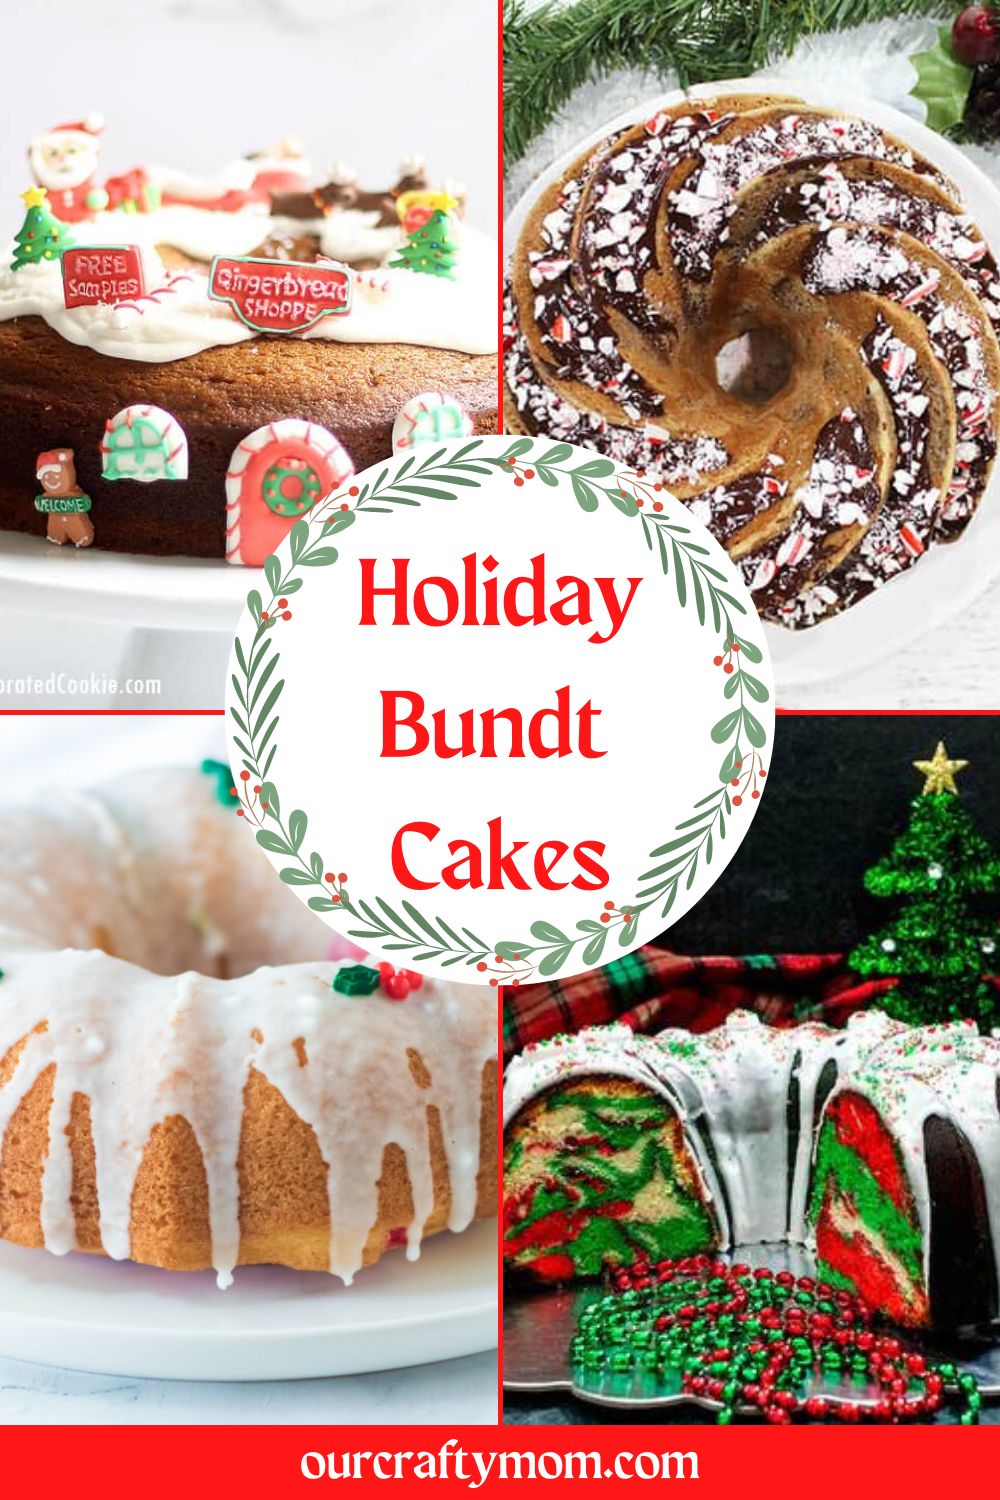 Top 15 Best Christmas Bundt Cake Recipes - Practically Homemade